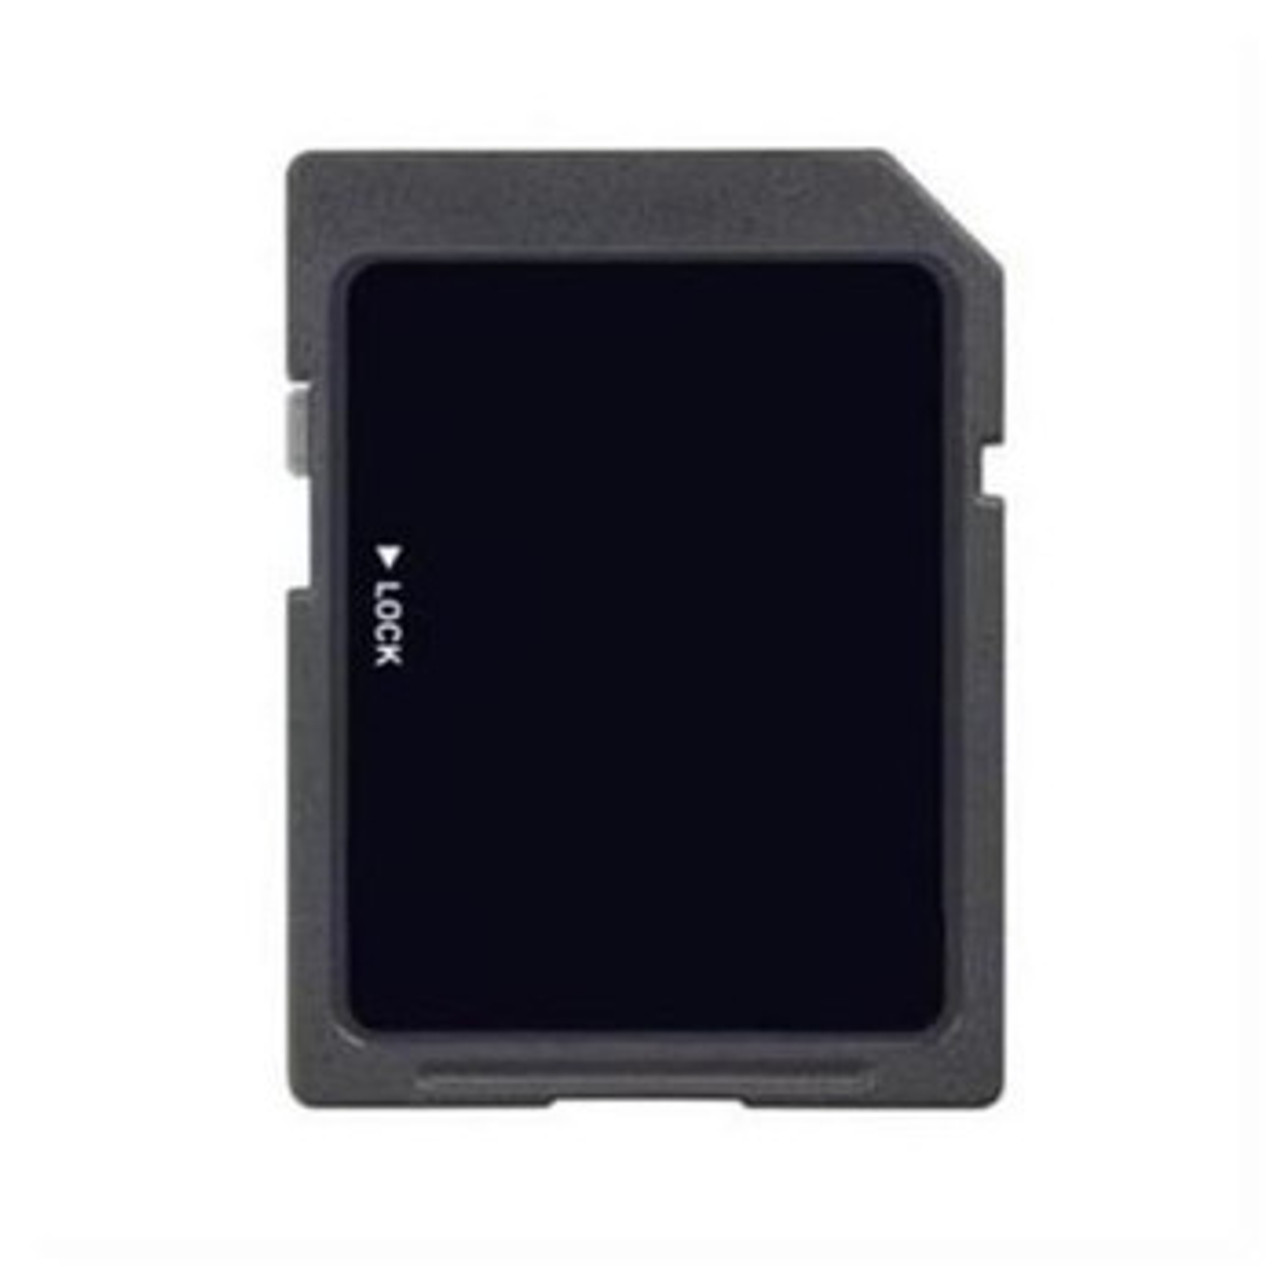 SDSDXVE-032G-ANCIN | Sandisk | Extreme 32Gb Sdhc Uhs-I Flash Memory Card